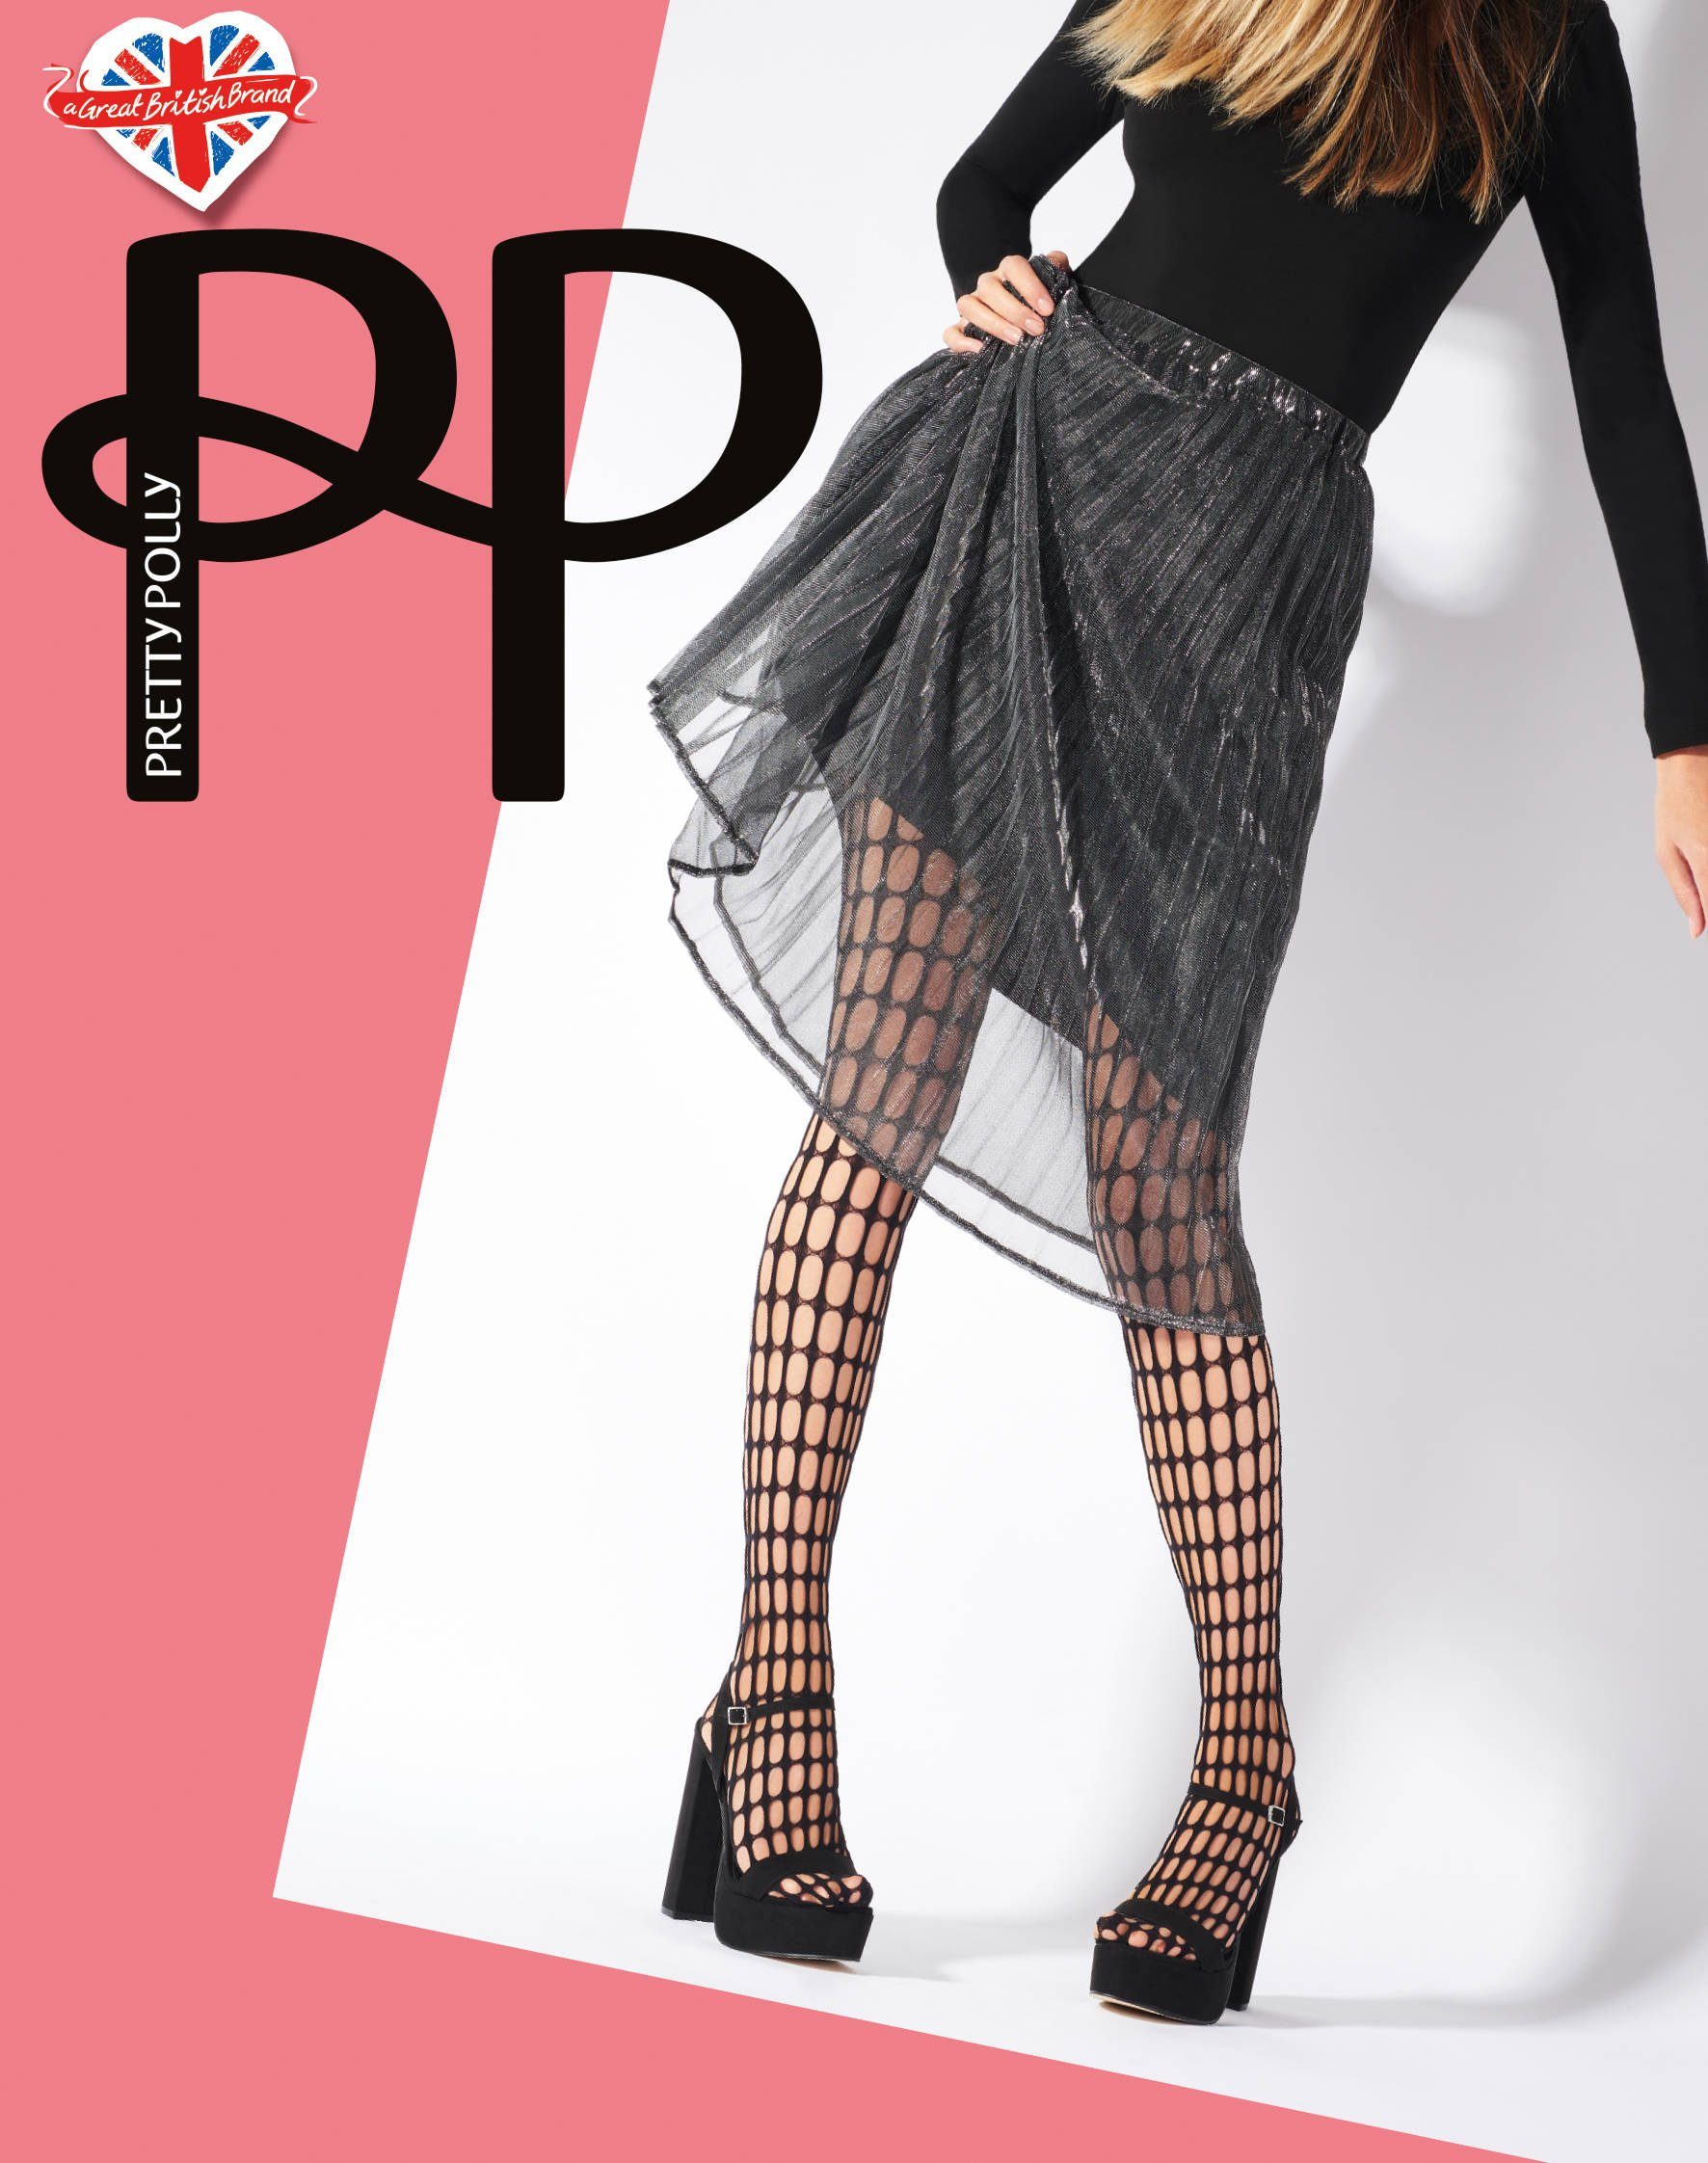 Pretty Polly Feinstrumpfhose Premium Fashion Oblong Net Tights black One Size 15 DEN (Strumpfhose 1 St. Spitze/Netz) ohne Naht